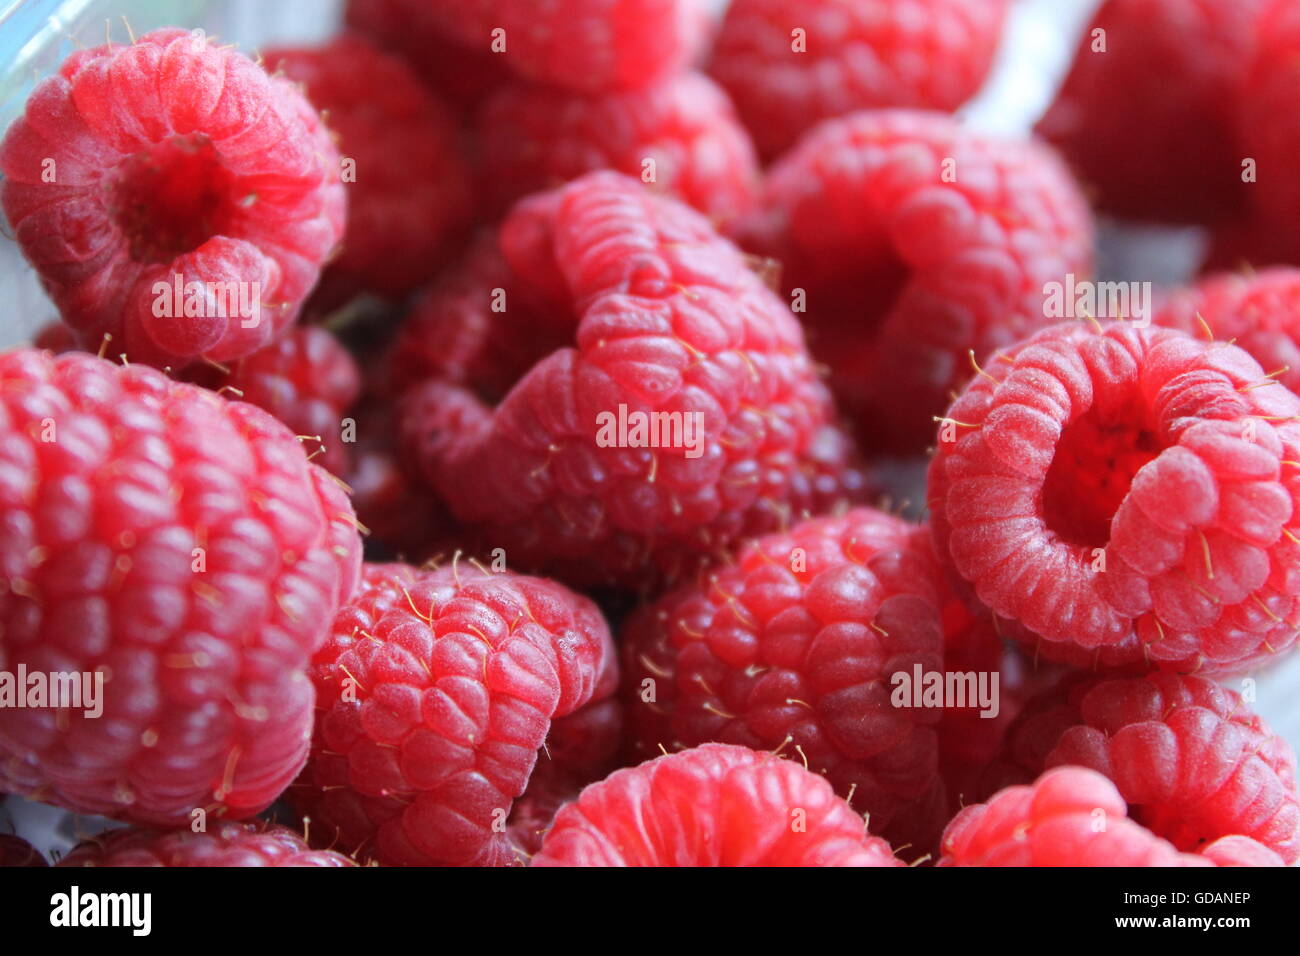 Raspberry, raspberries, fruit, healthy eating, diet, jam making, preserves, summer, genus rubus, allotment Stock Photo